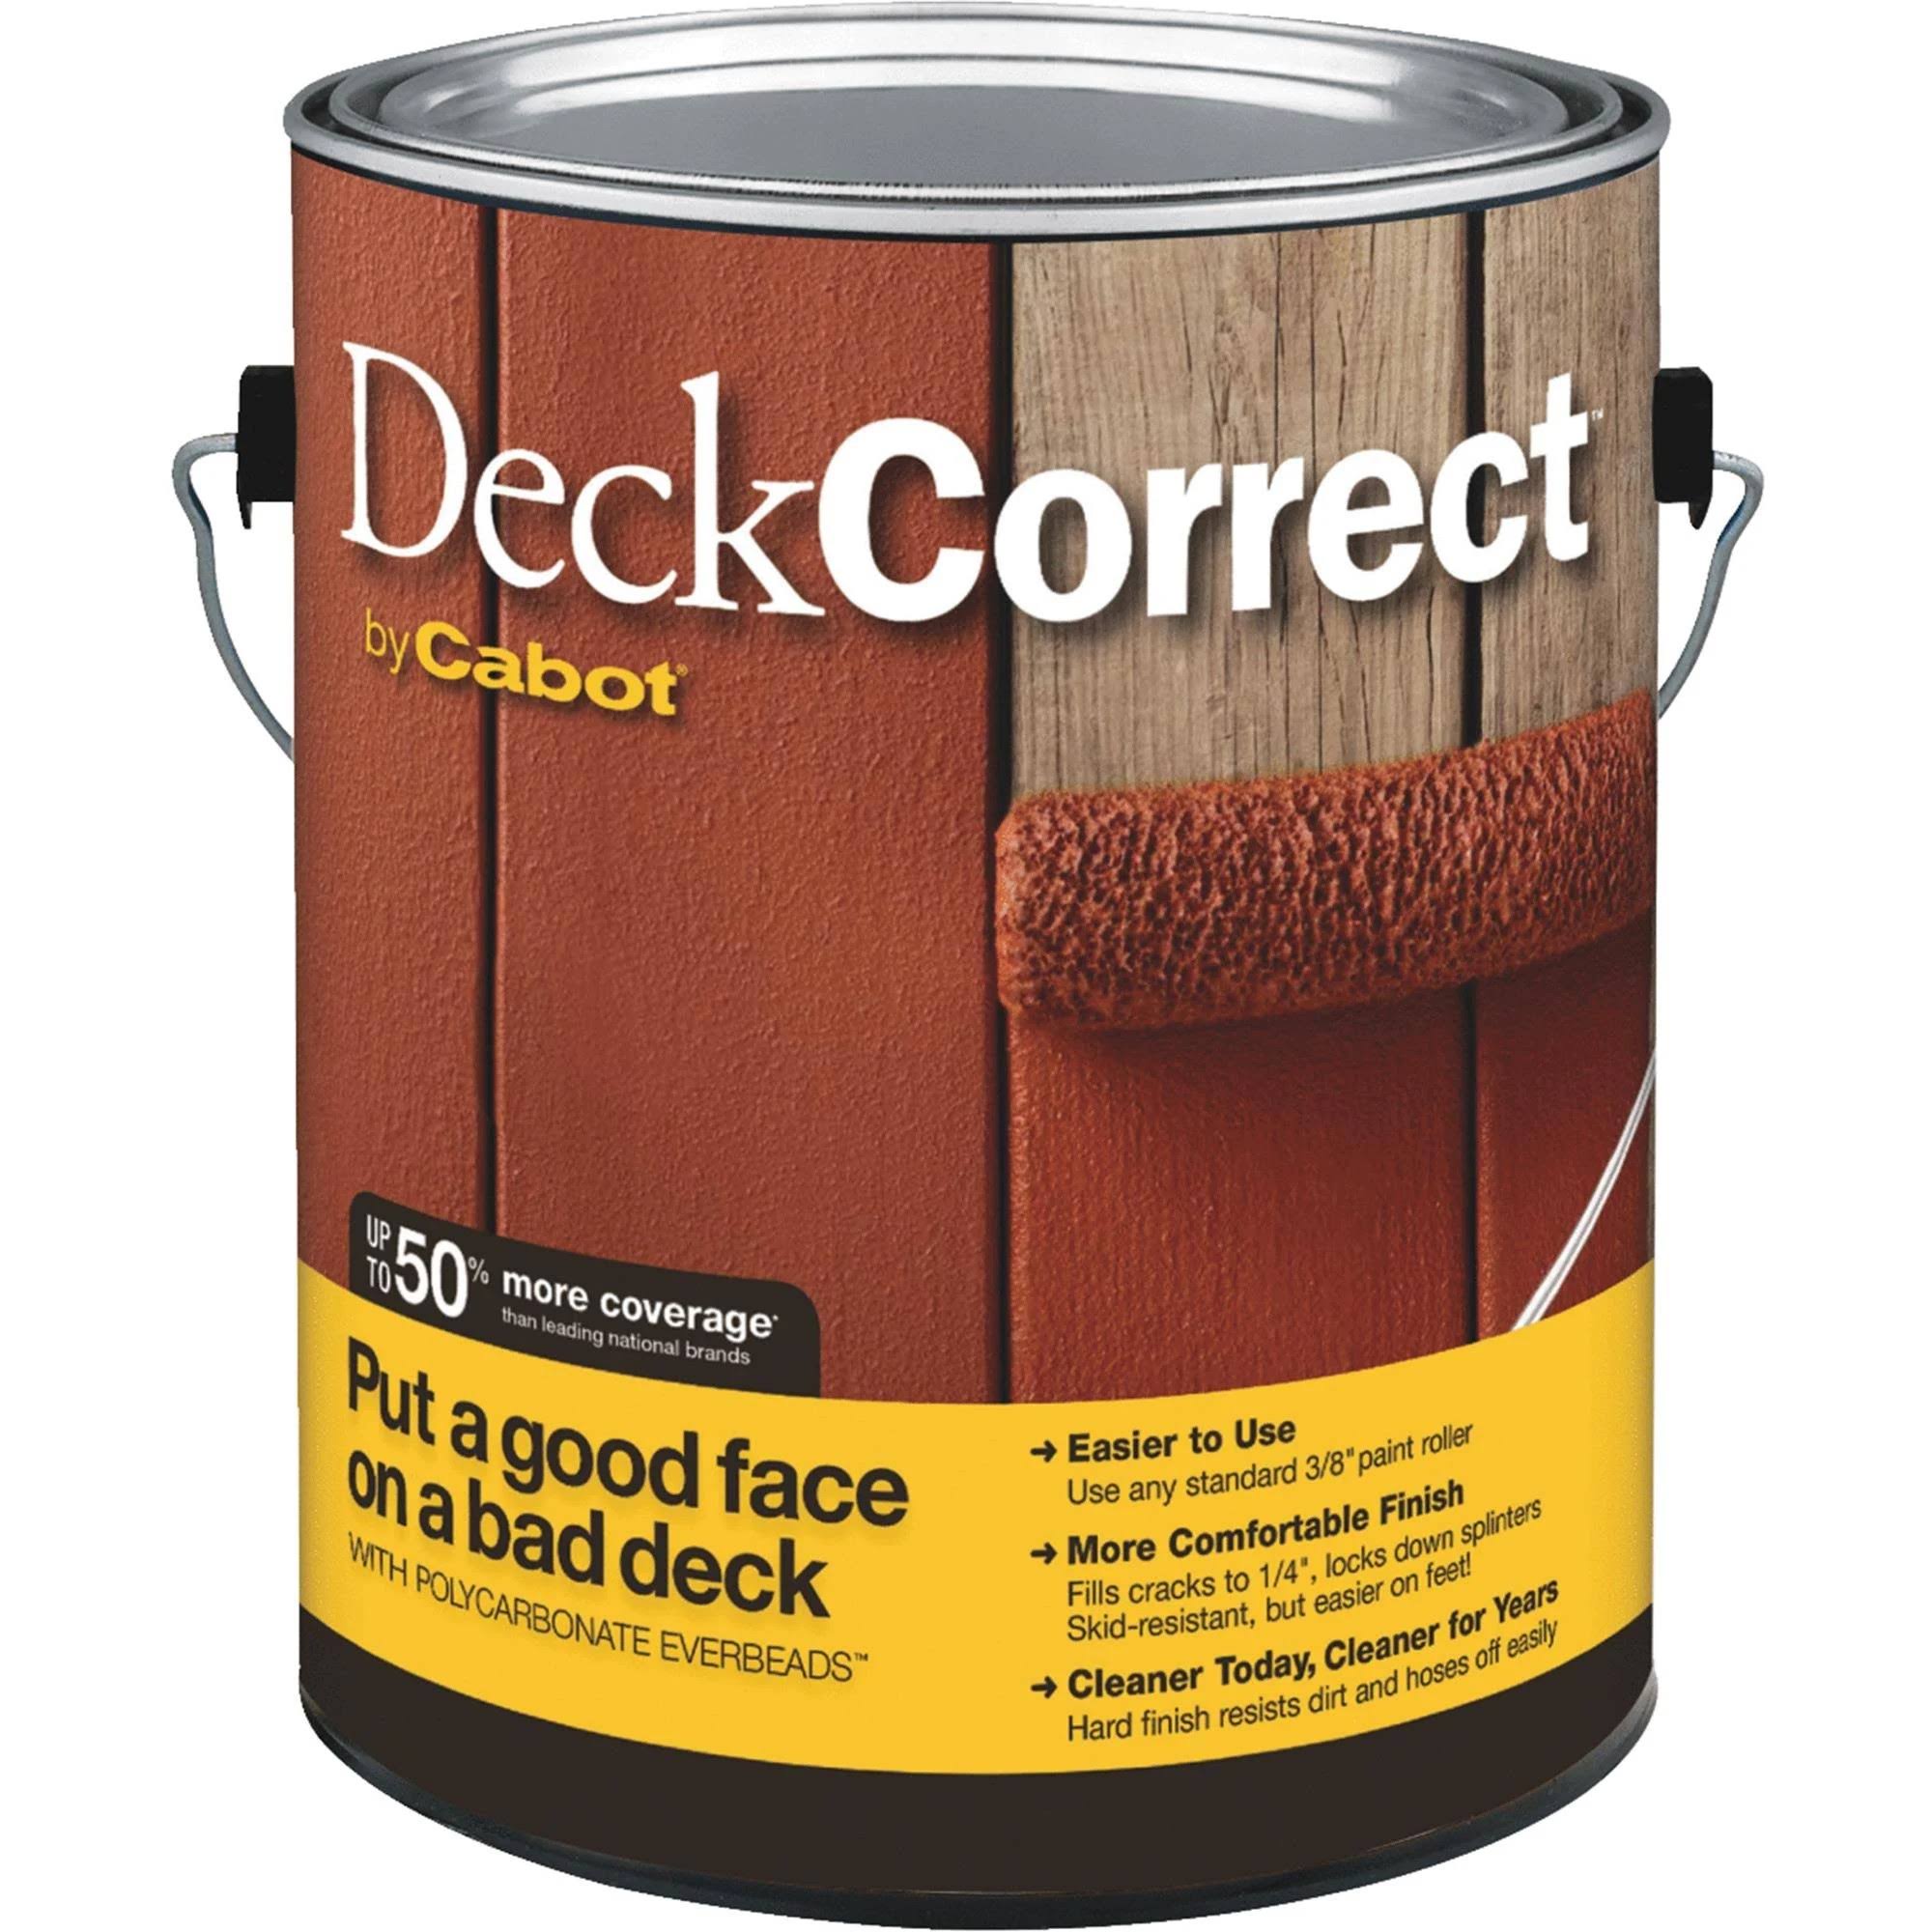 Cabot Deck Correct Coating - Stain Tint Base